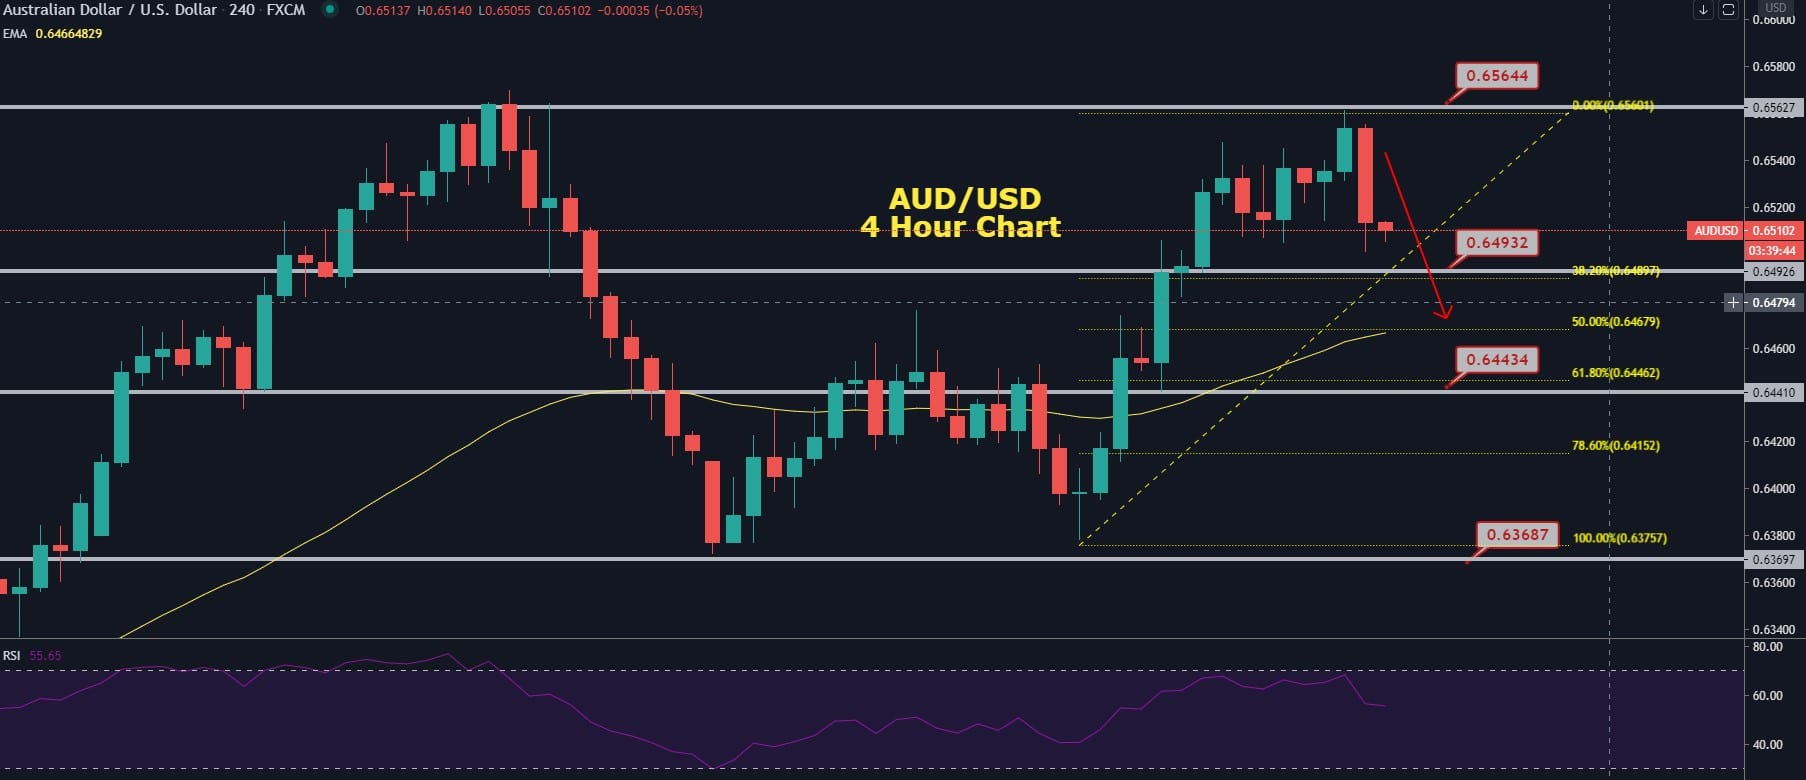 AUD/USD On a Bearish Run - Stronger Dollar In Play!